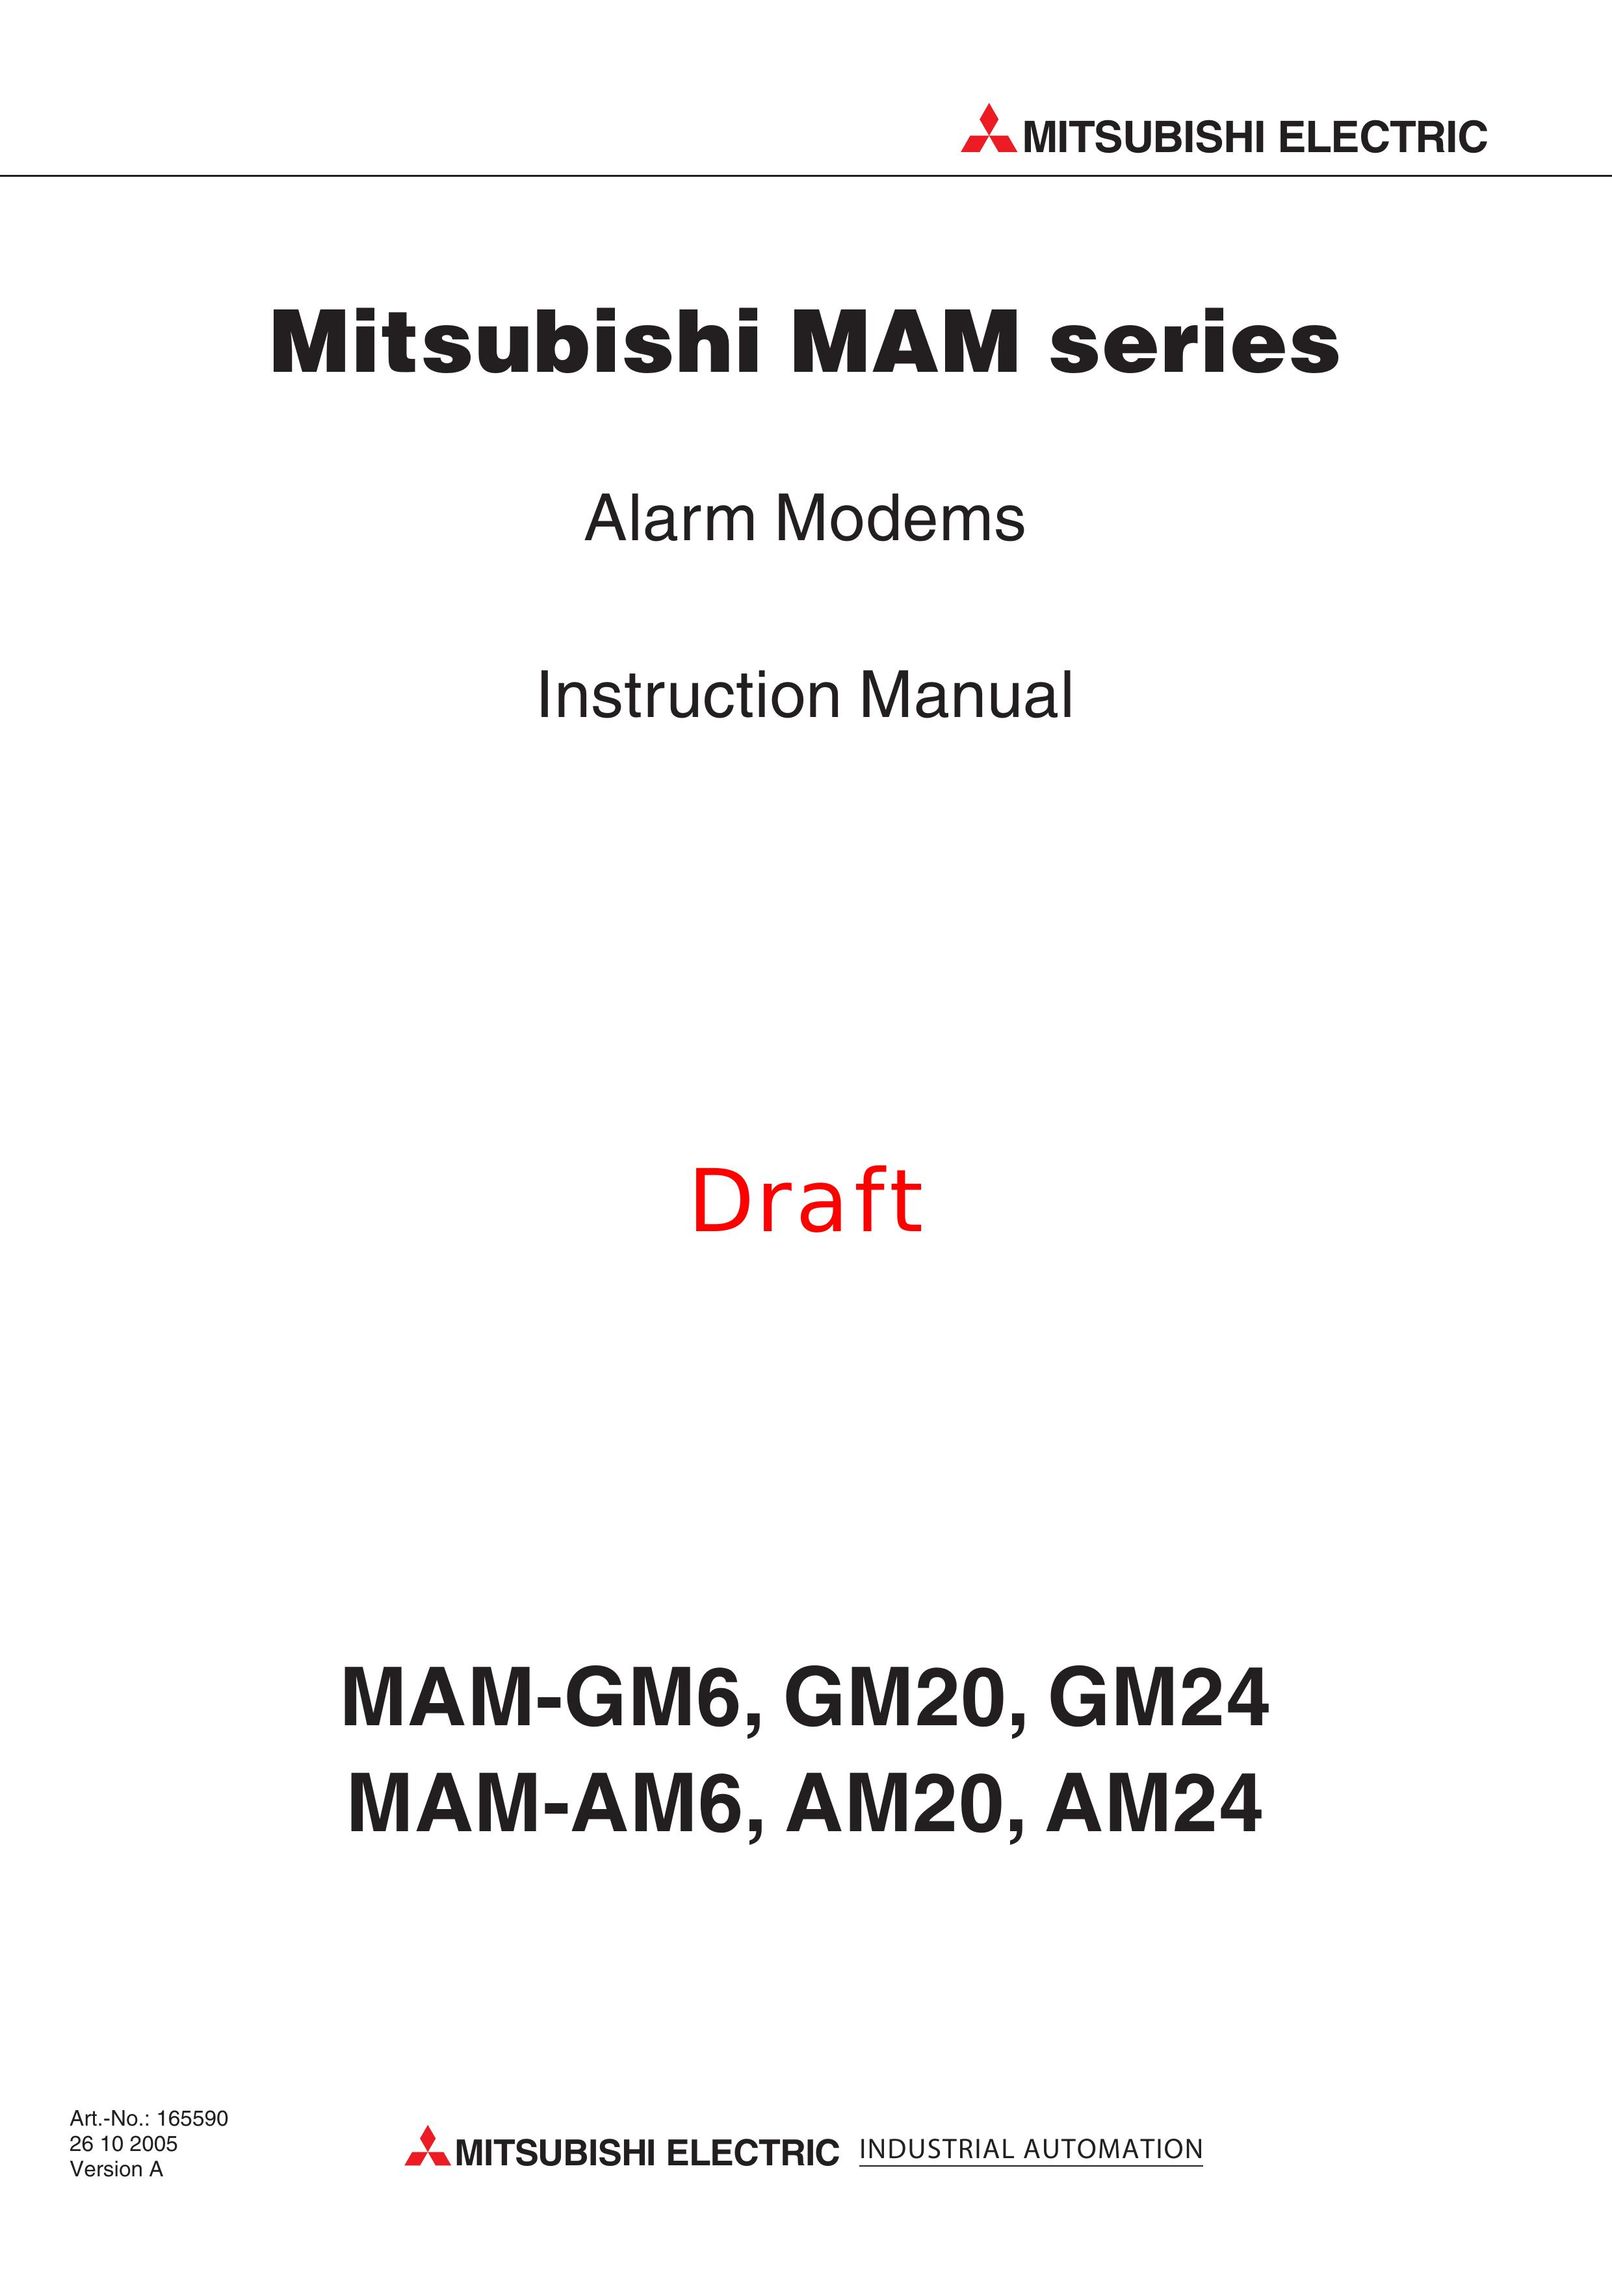 Mitsubishi Electronics MAM-AM6 Modem User Manual